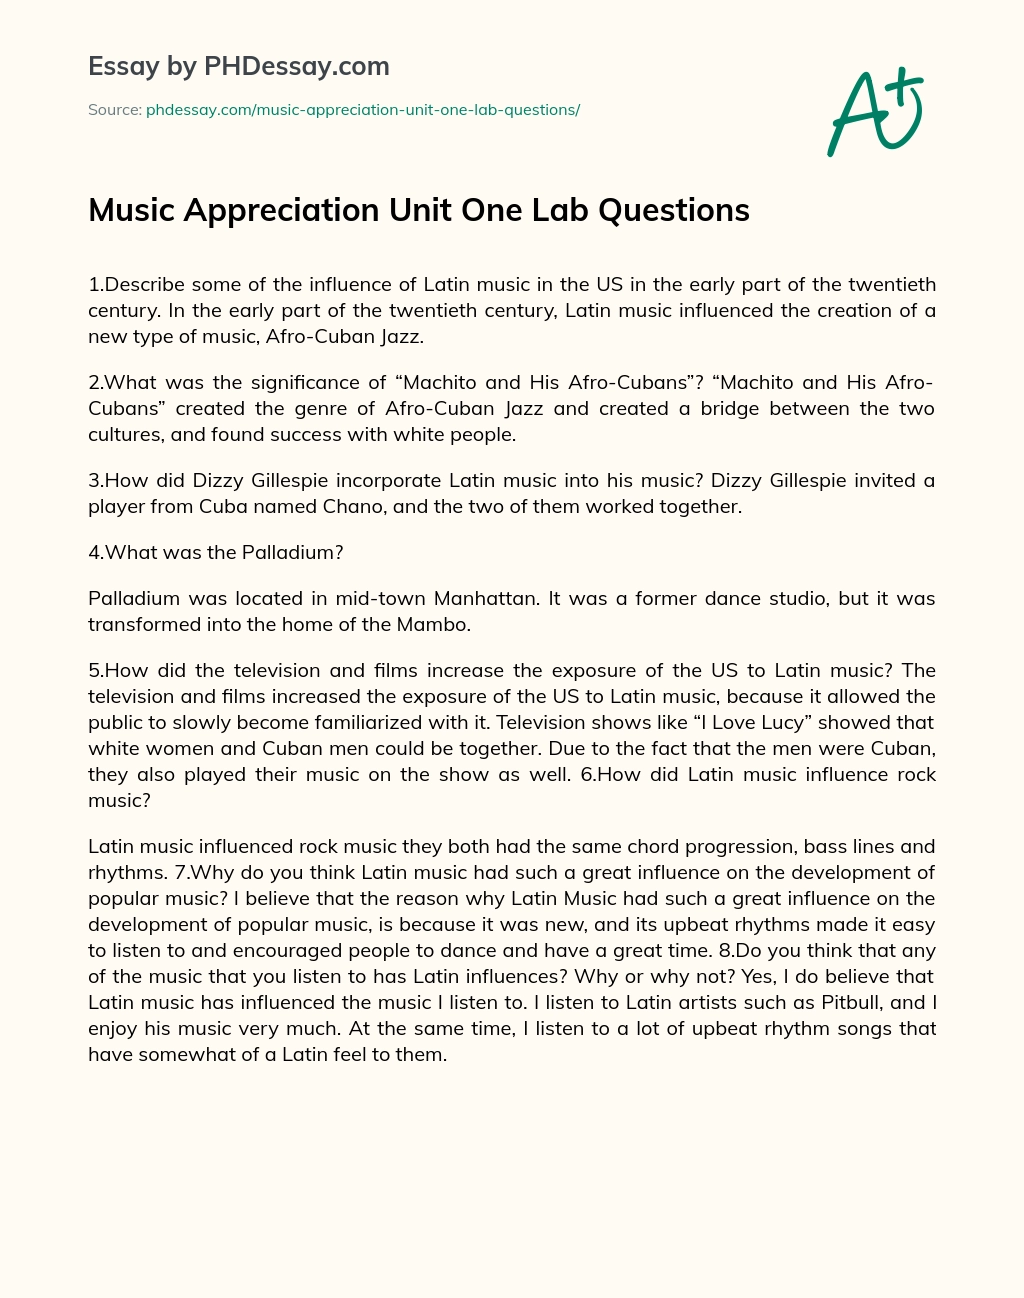 Music Appreciation Unit One Lab Questions essay